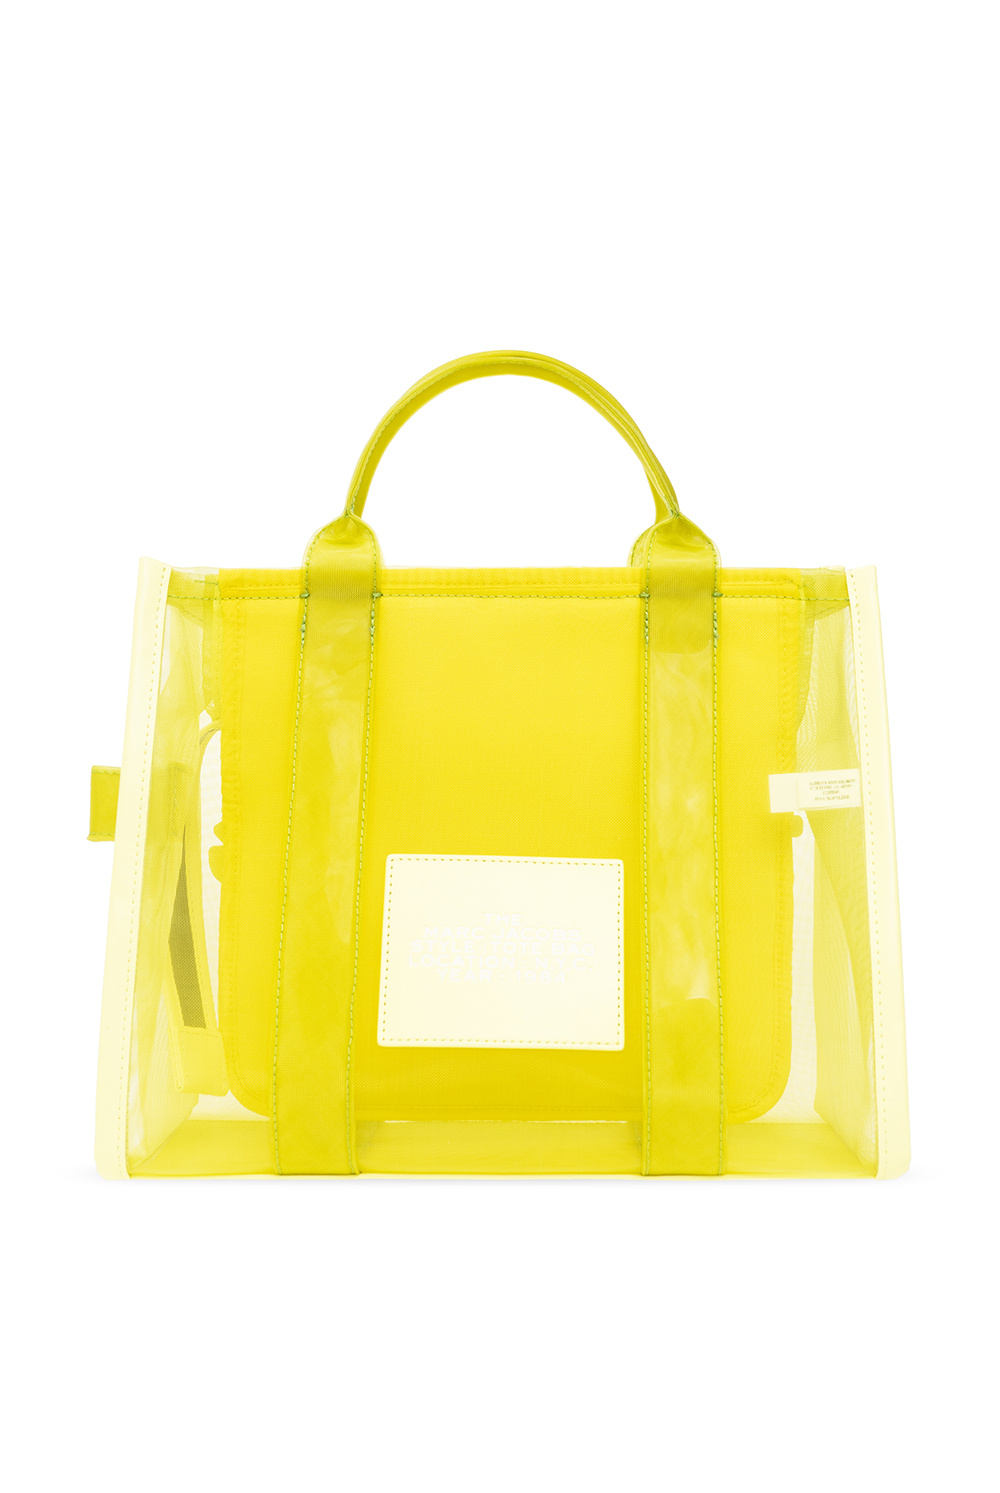 Marc Jacobs ‘The Medium Tote’ shopper bag